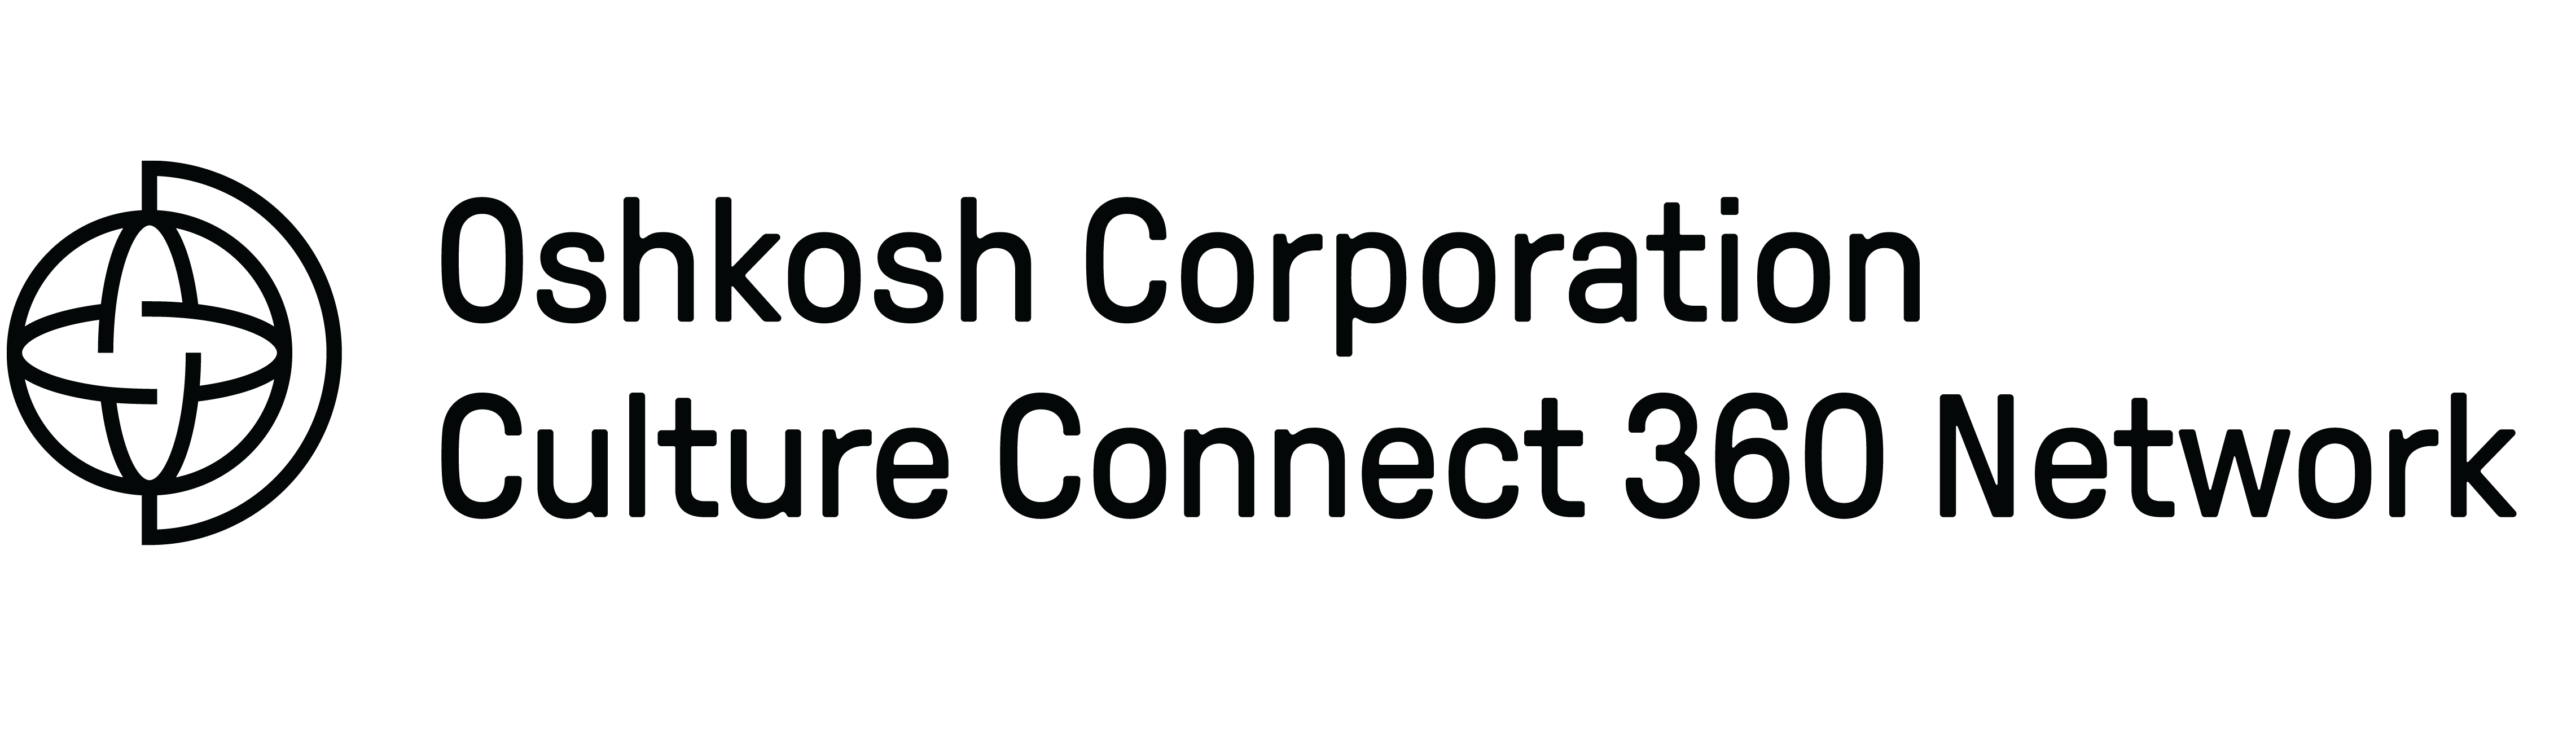 Black Oshkosh Corporation Culture Connect 360 Network logo